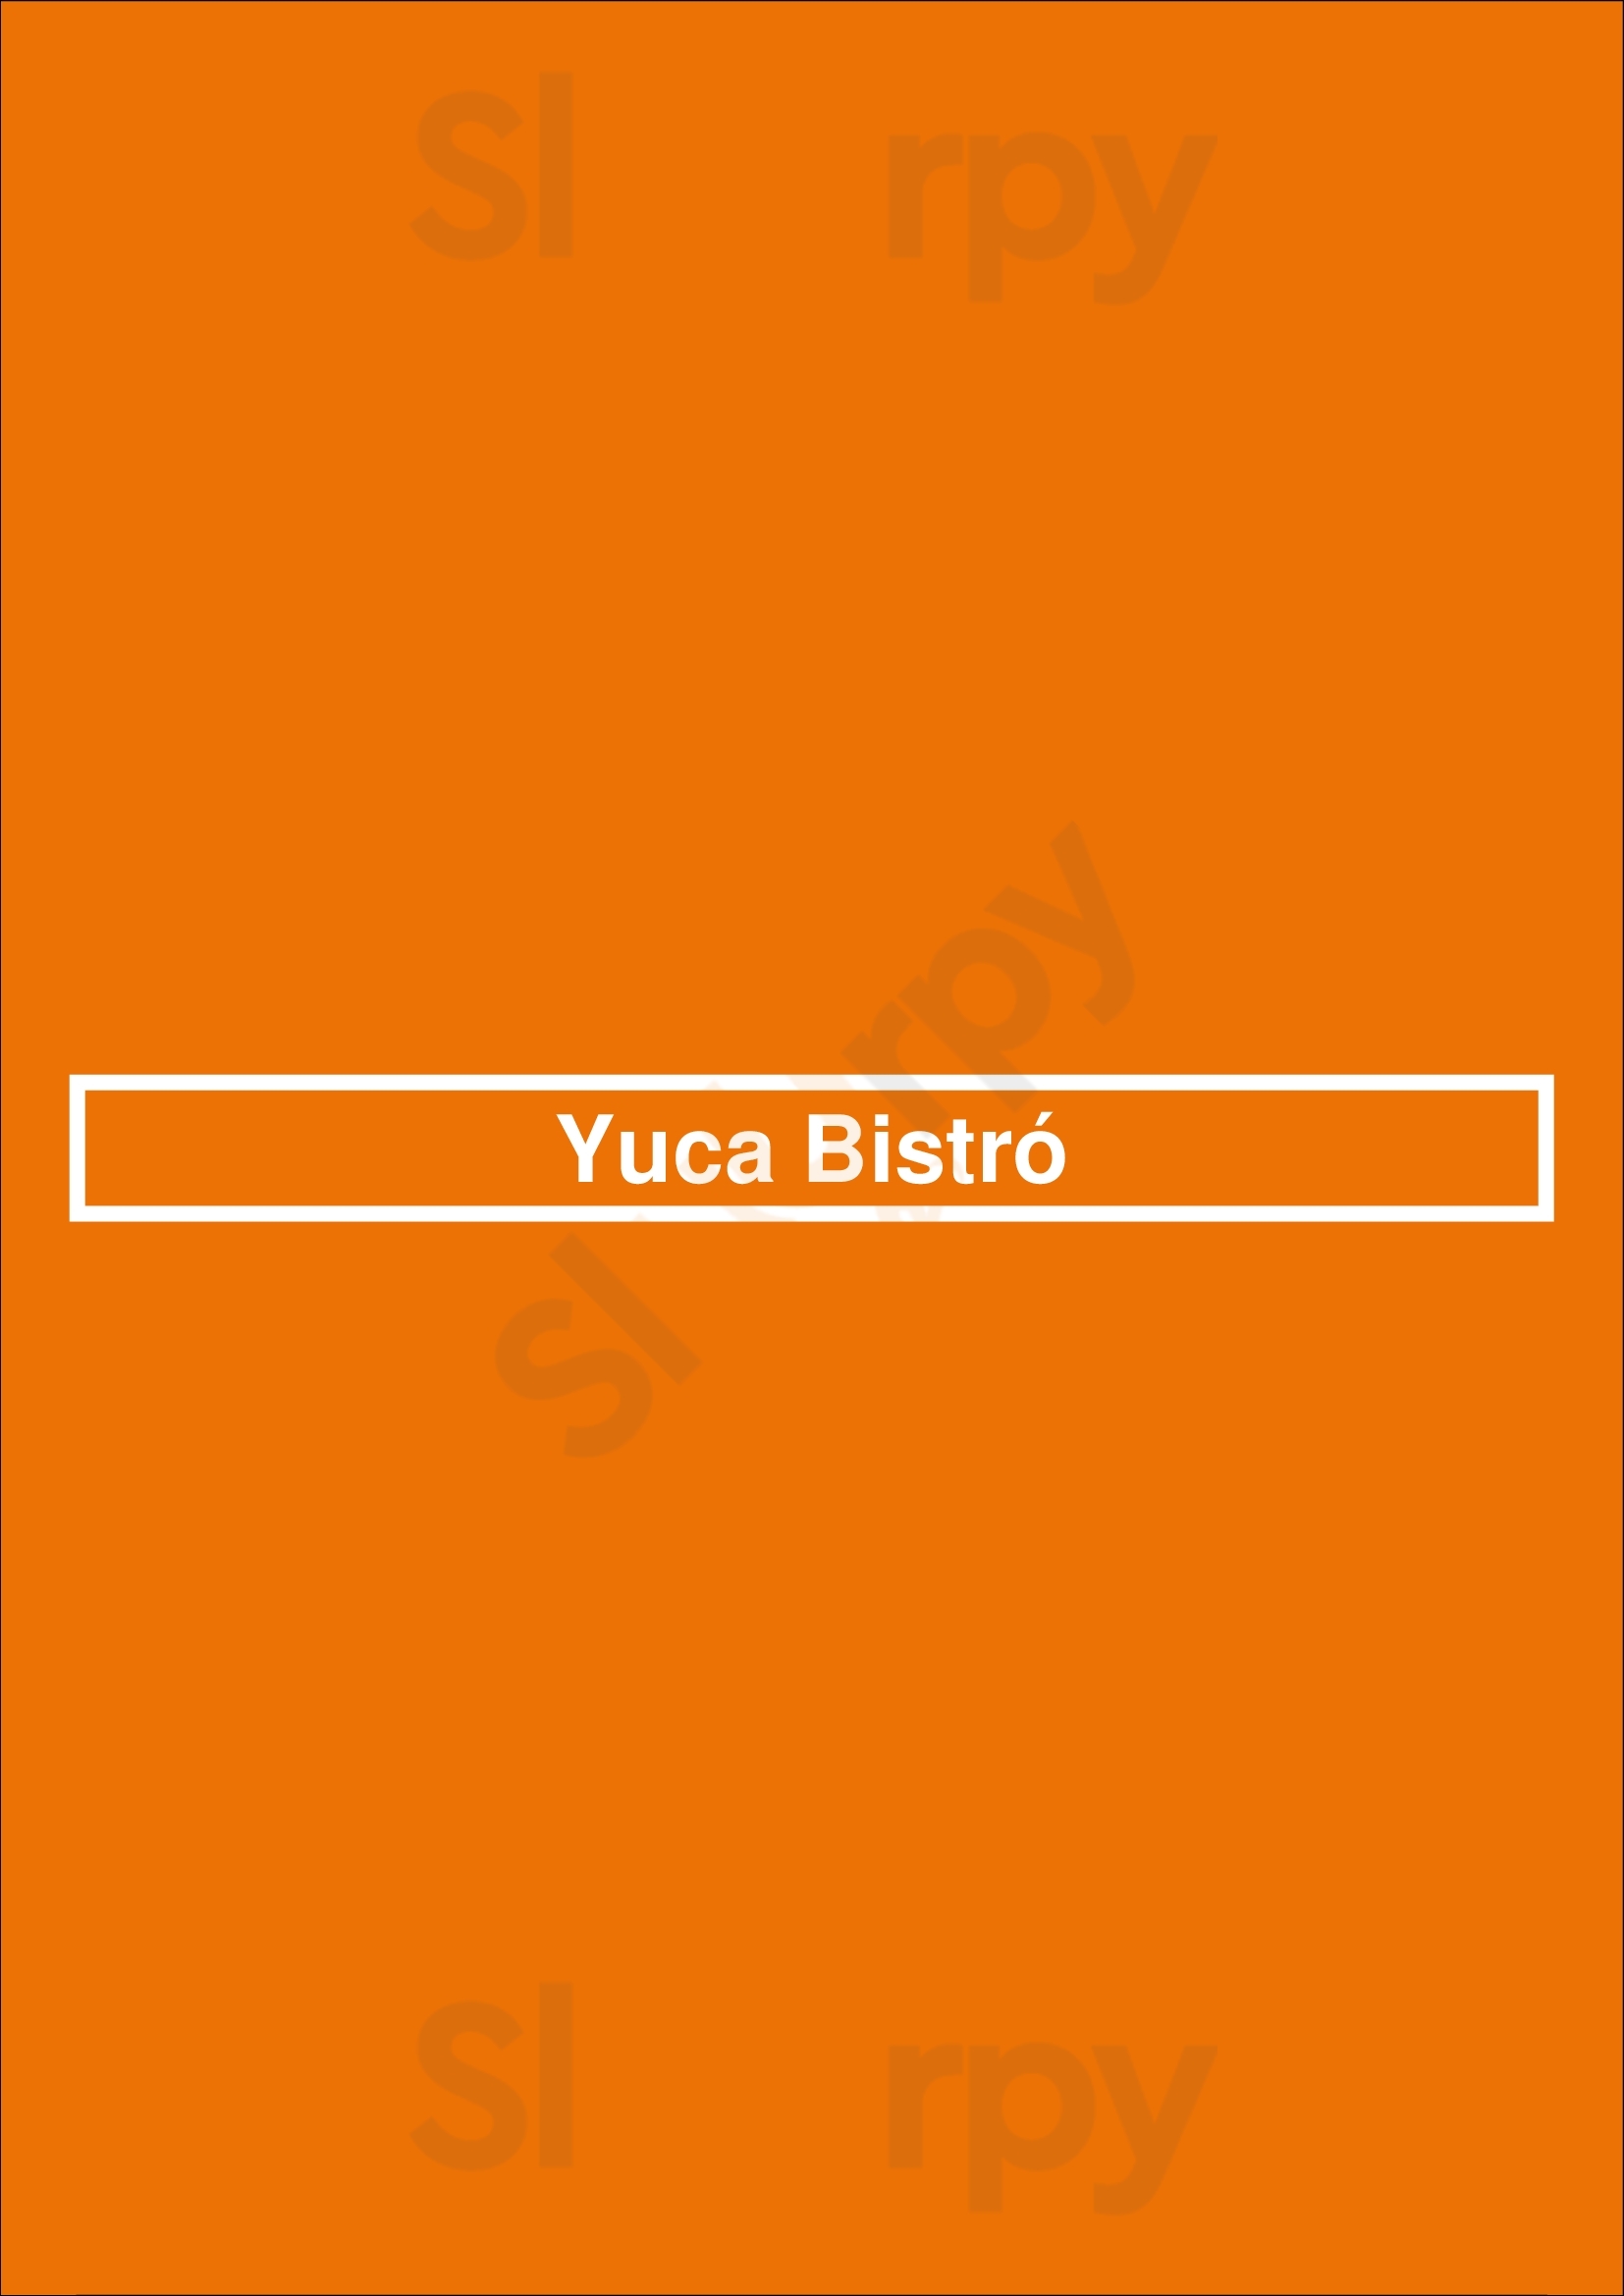 Yuca Bistró Buenos Aires Menu - 1